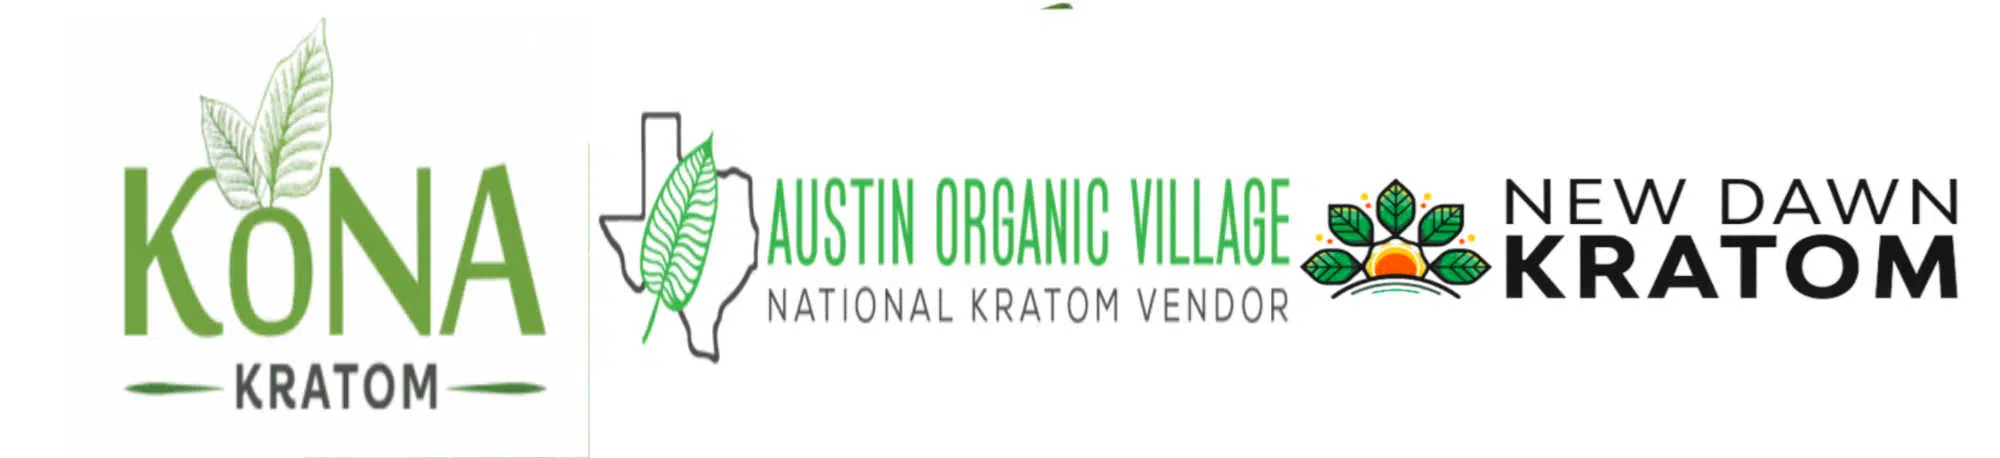 image of kratom brand